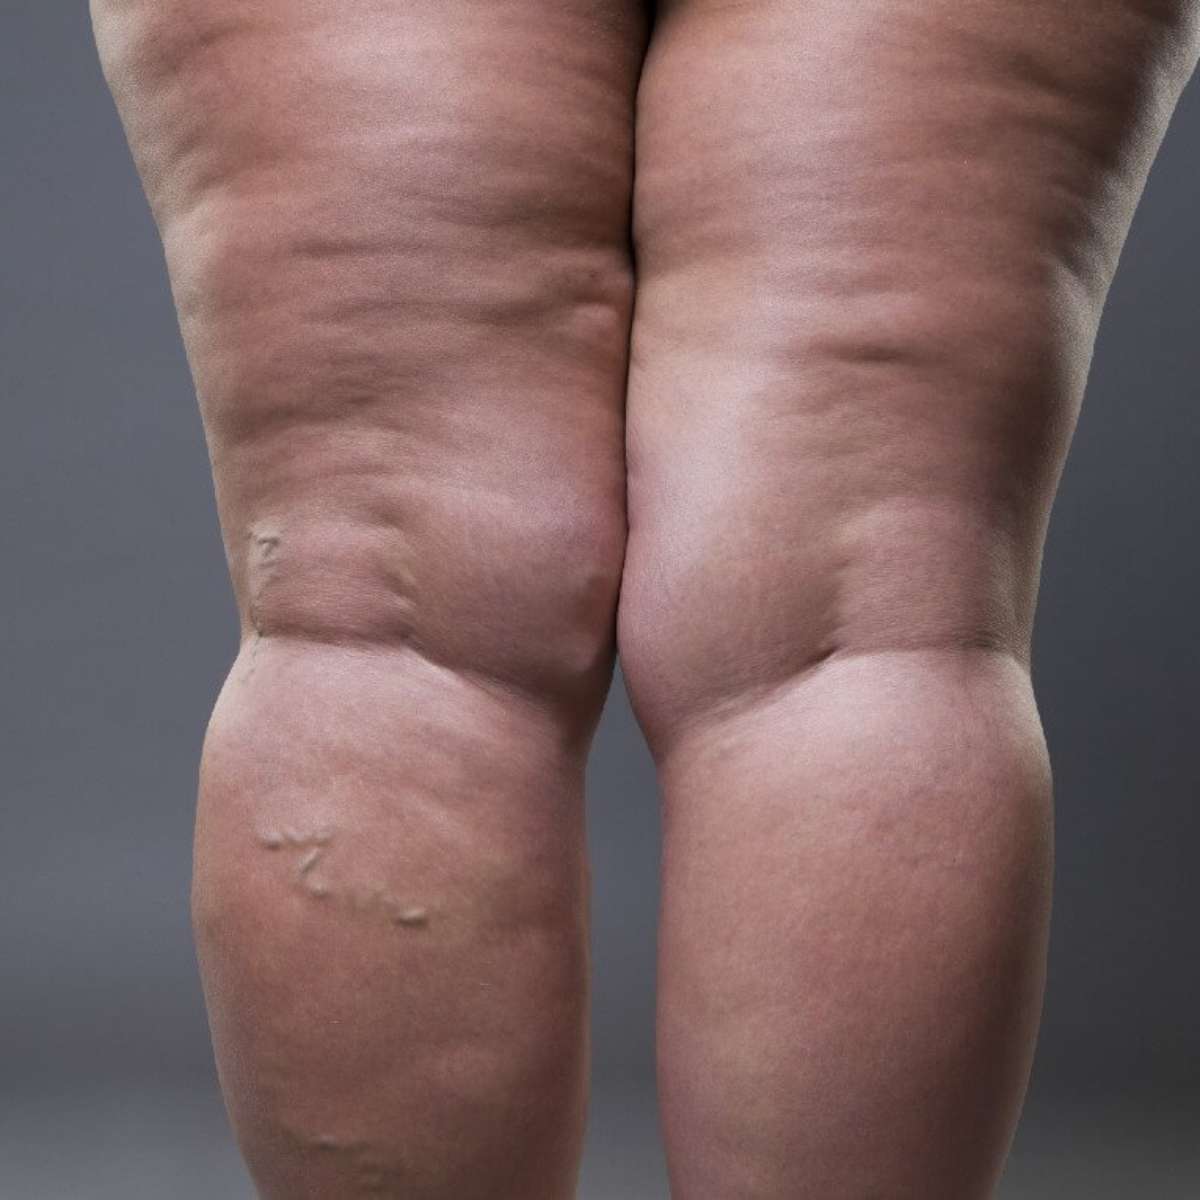 Lipedema: saiba o que causa o acúmulo de gordura no corpo